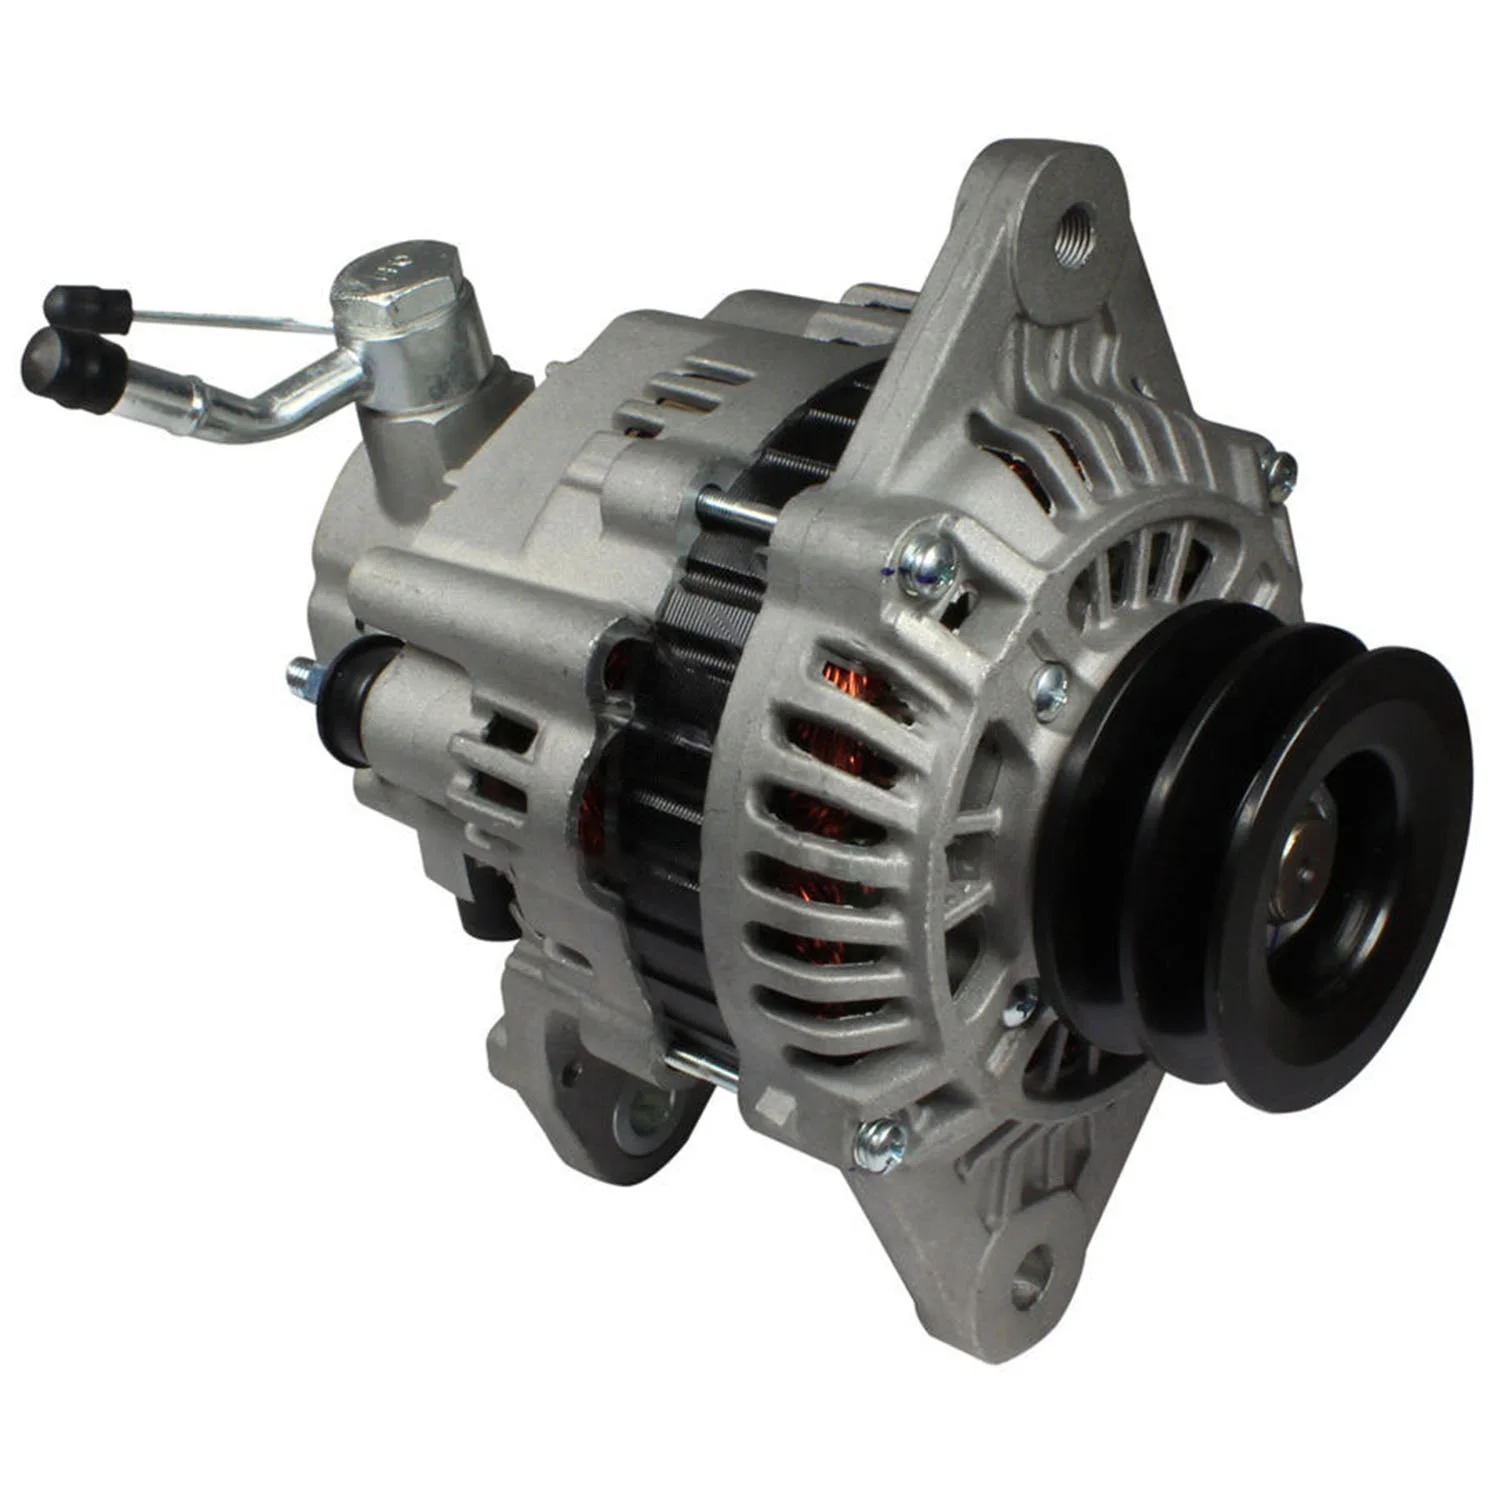 

Auto Dynamo Alternator Generator For Delco Mitsubishi UD11290A 114457 CAL35608 CAL35608AS CAL35608ES CAL35608GS 32B6800200